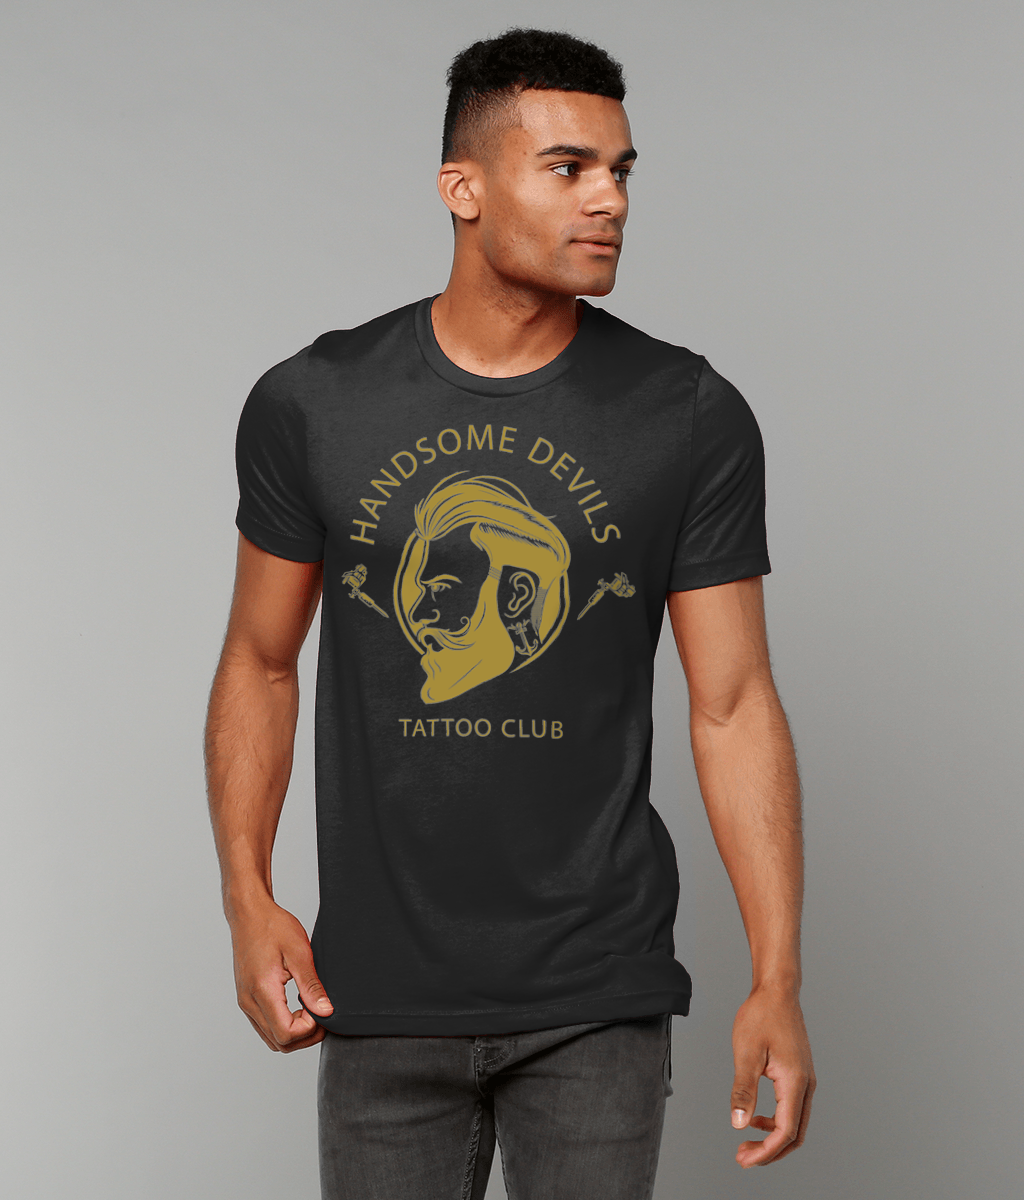 Cotton Crew Neck T-Shirt - Black & Gold